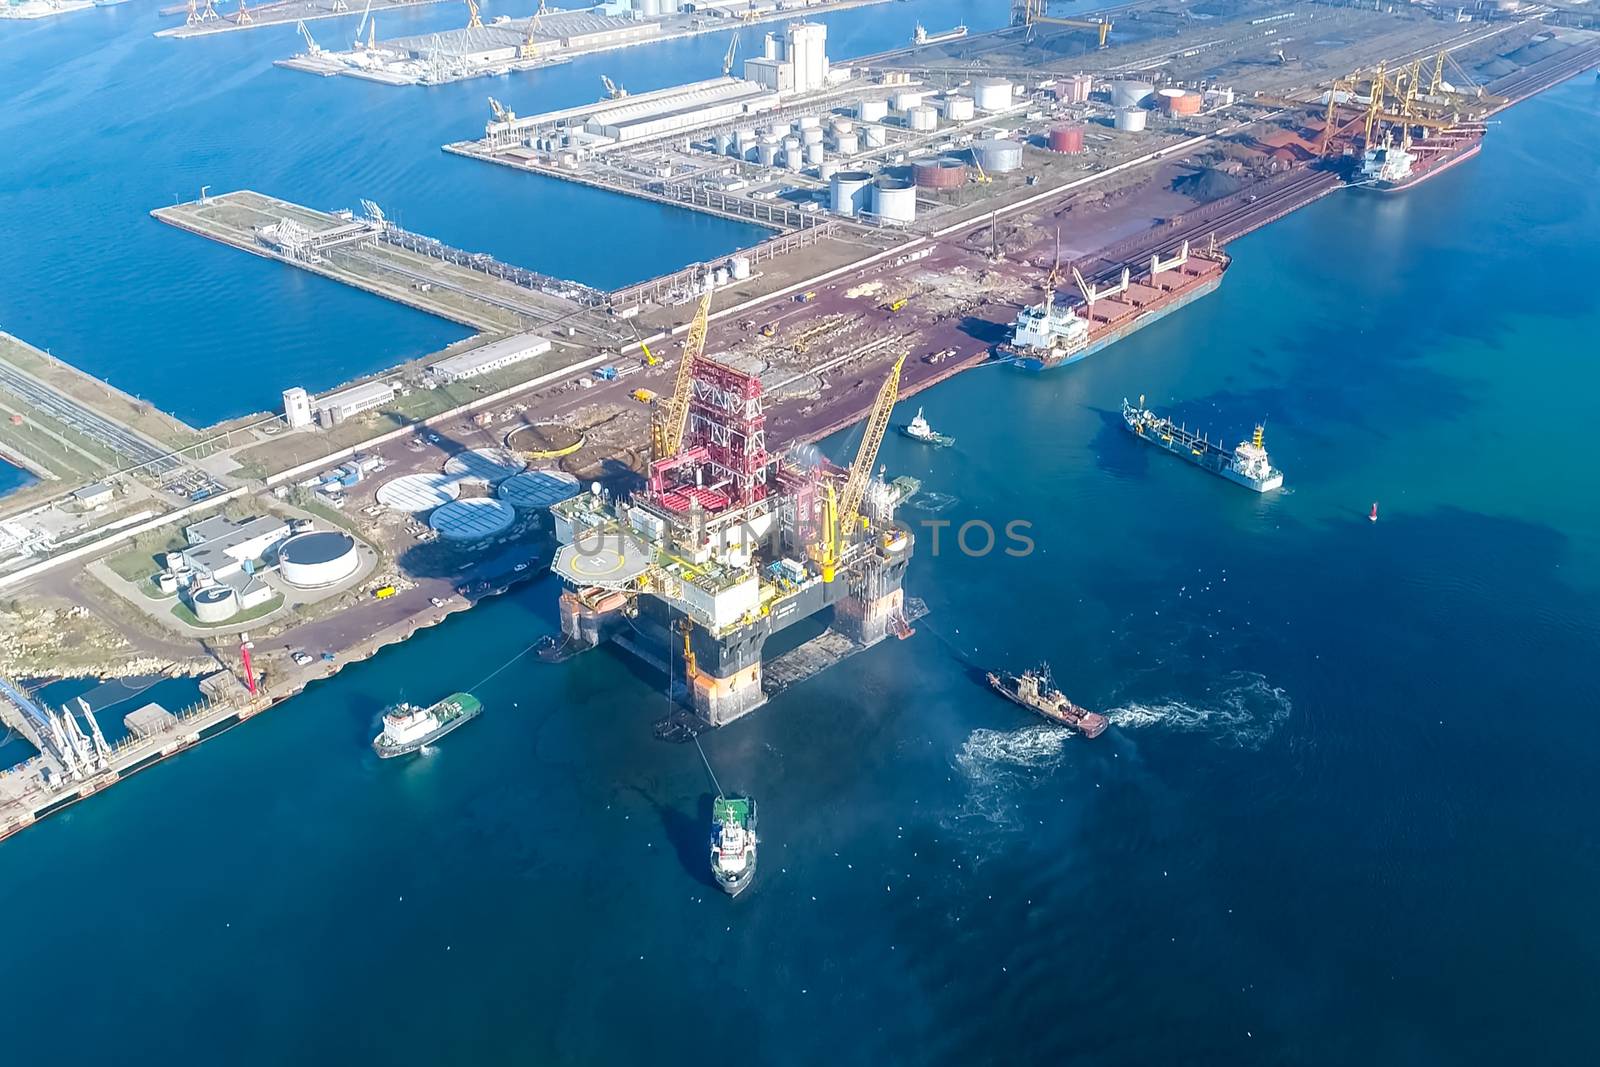 Drilling platform in the port. Towing of the oil platform.